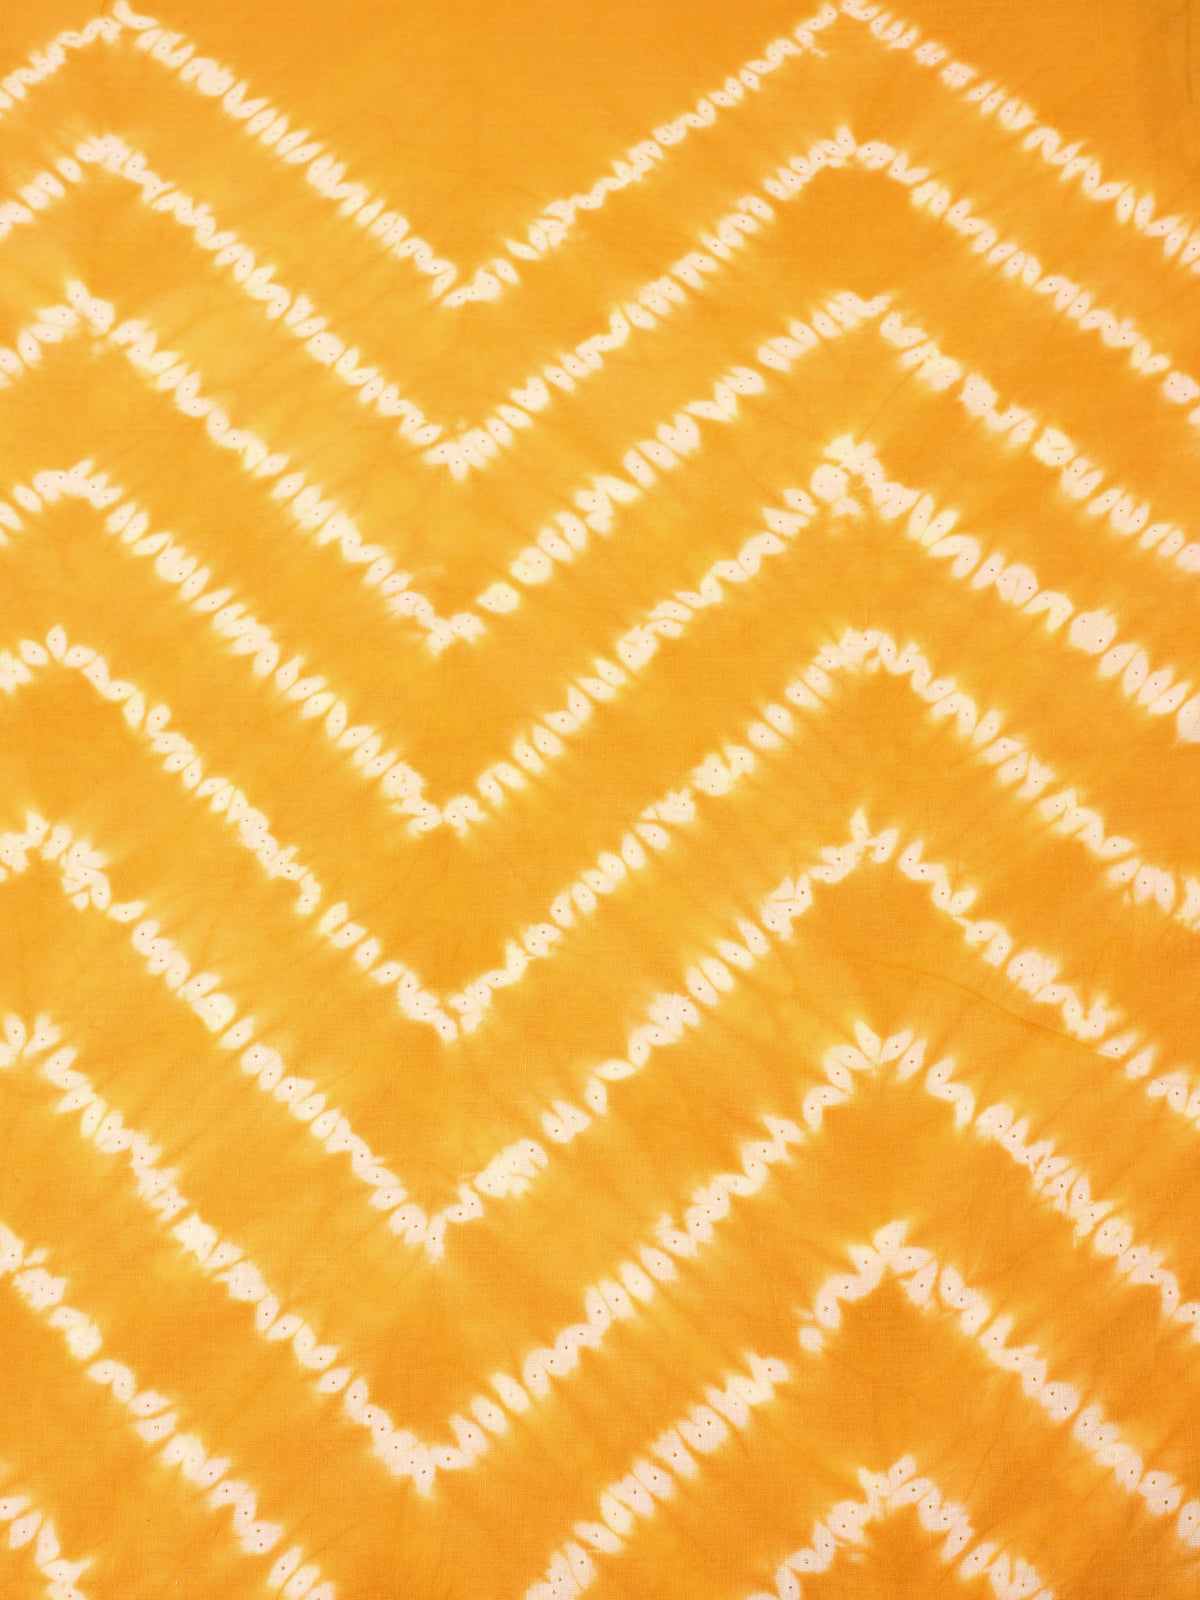 Yellow White Hand Shibori Dyed Cotton Fabric Per Meter - F0916277